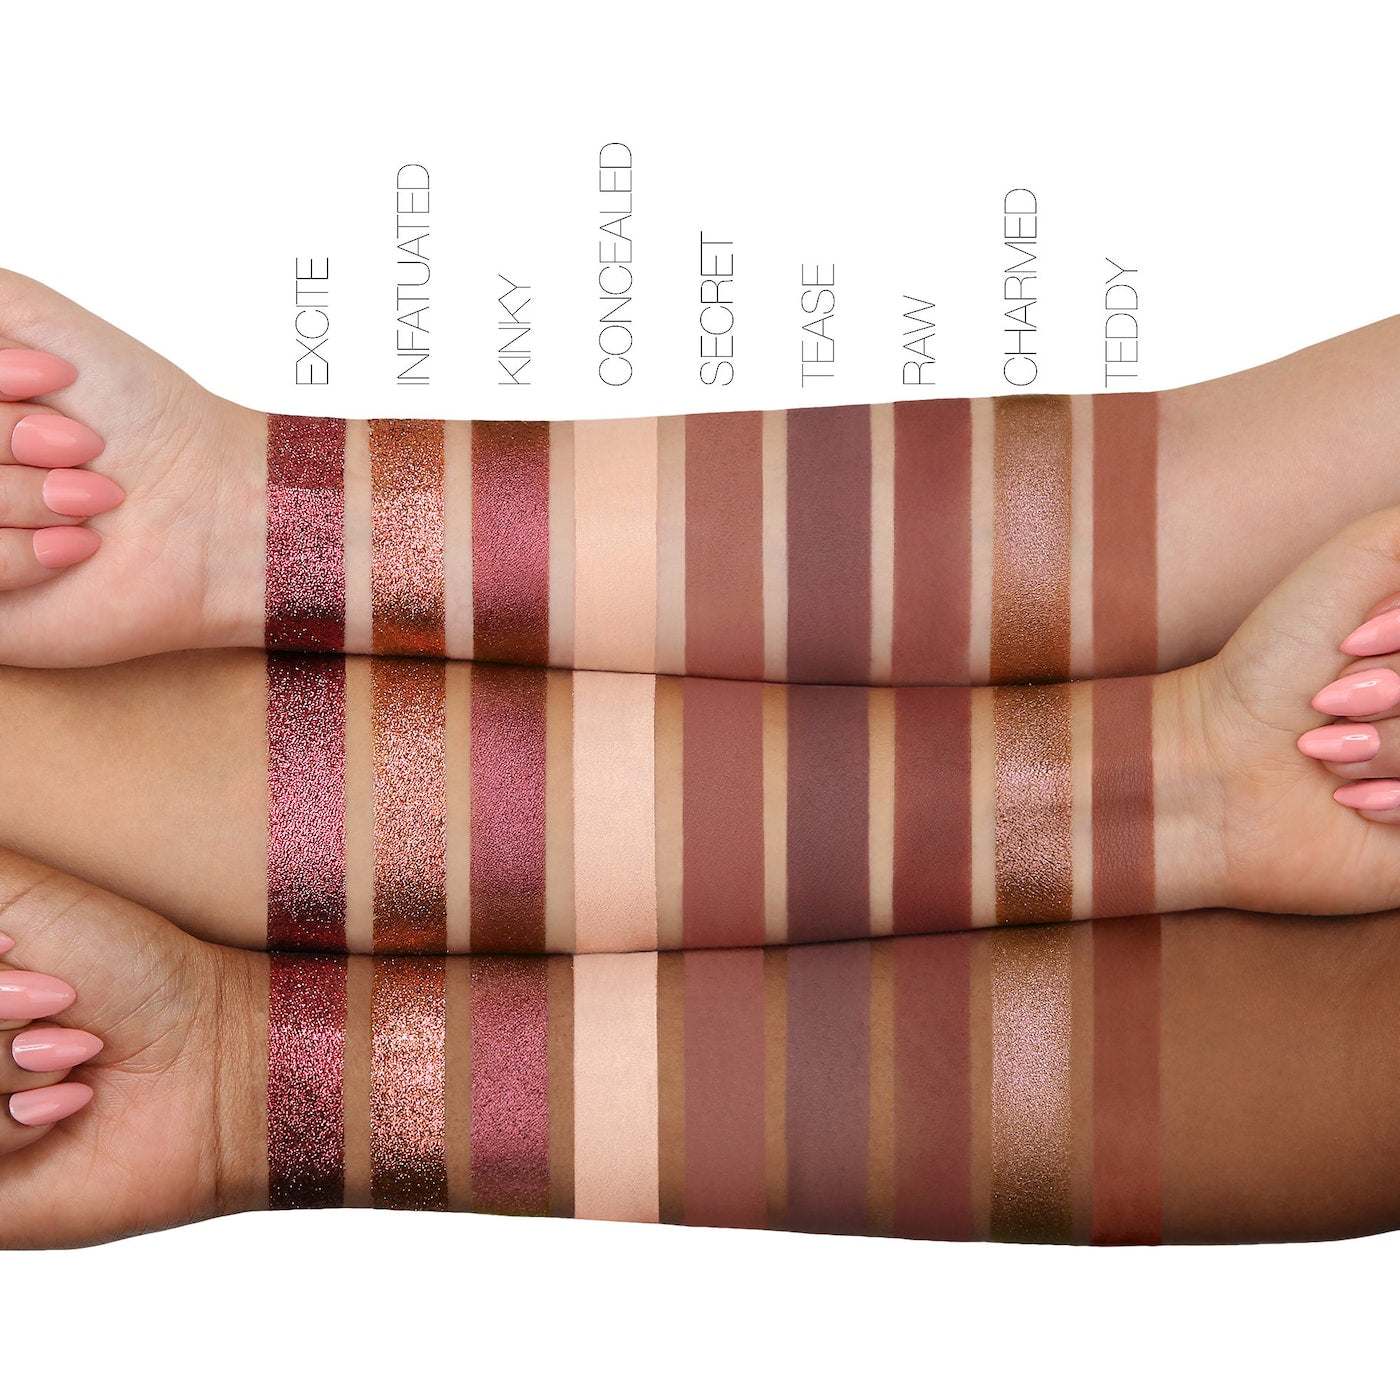 Huda Beauty | Eyeshadow Palette | The New Nude